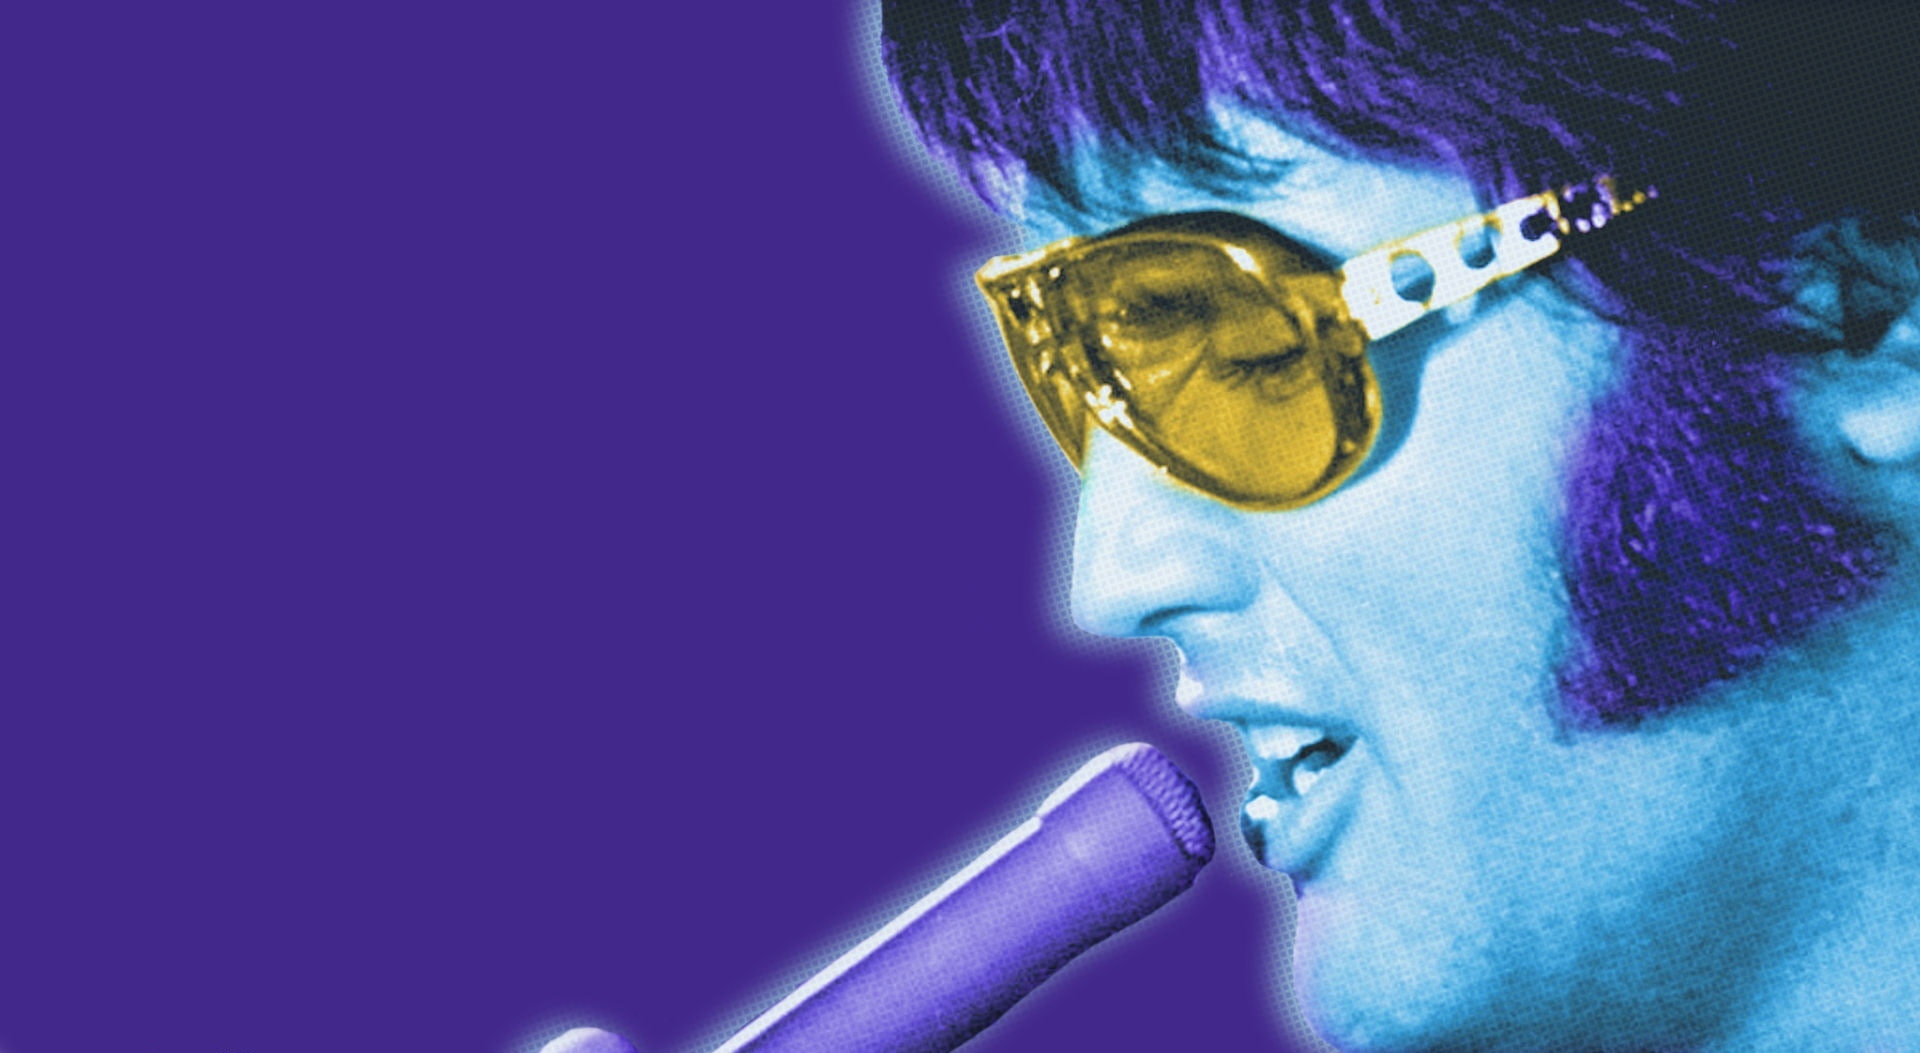 Elvis - That's The Way It Is, yellow sunglasses, Vintage, Purple